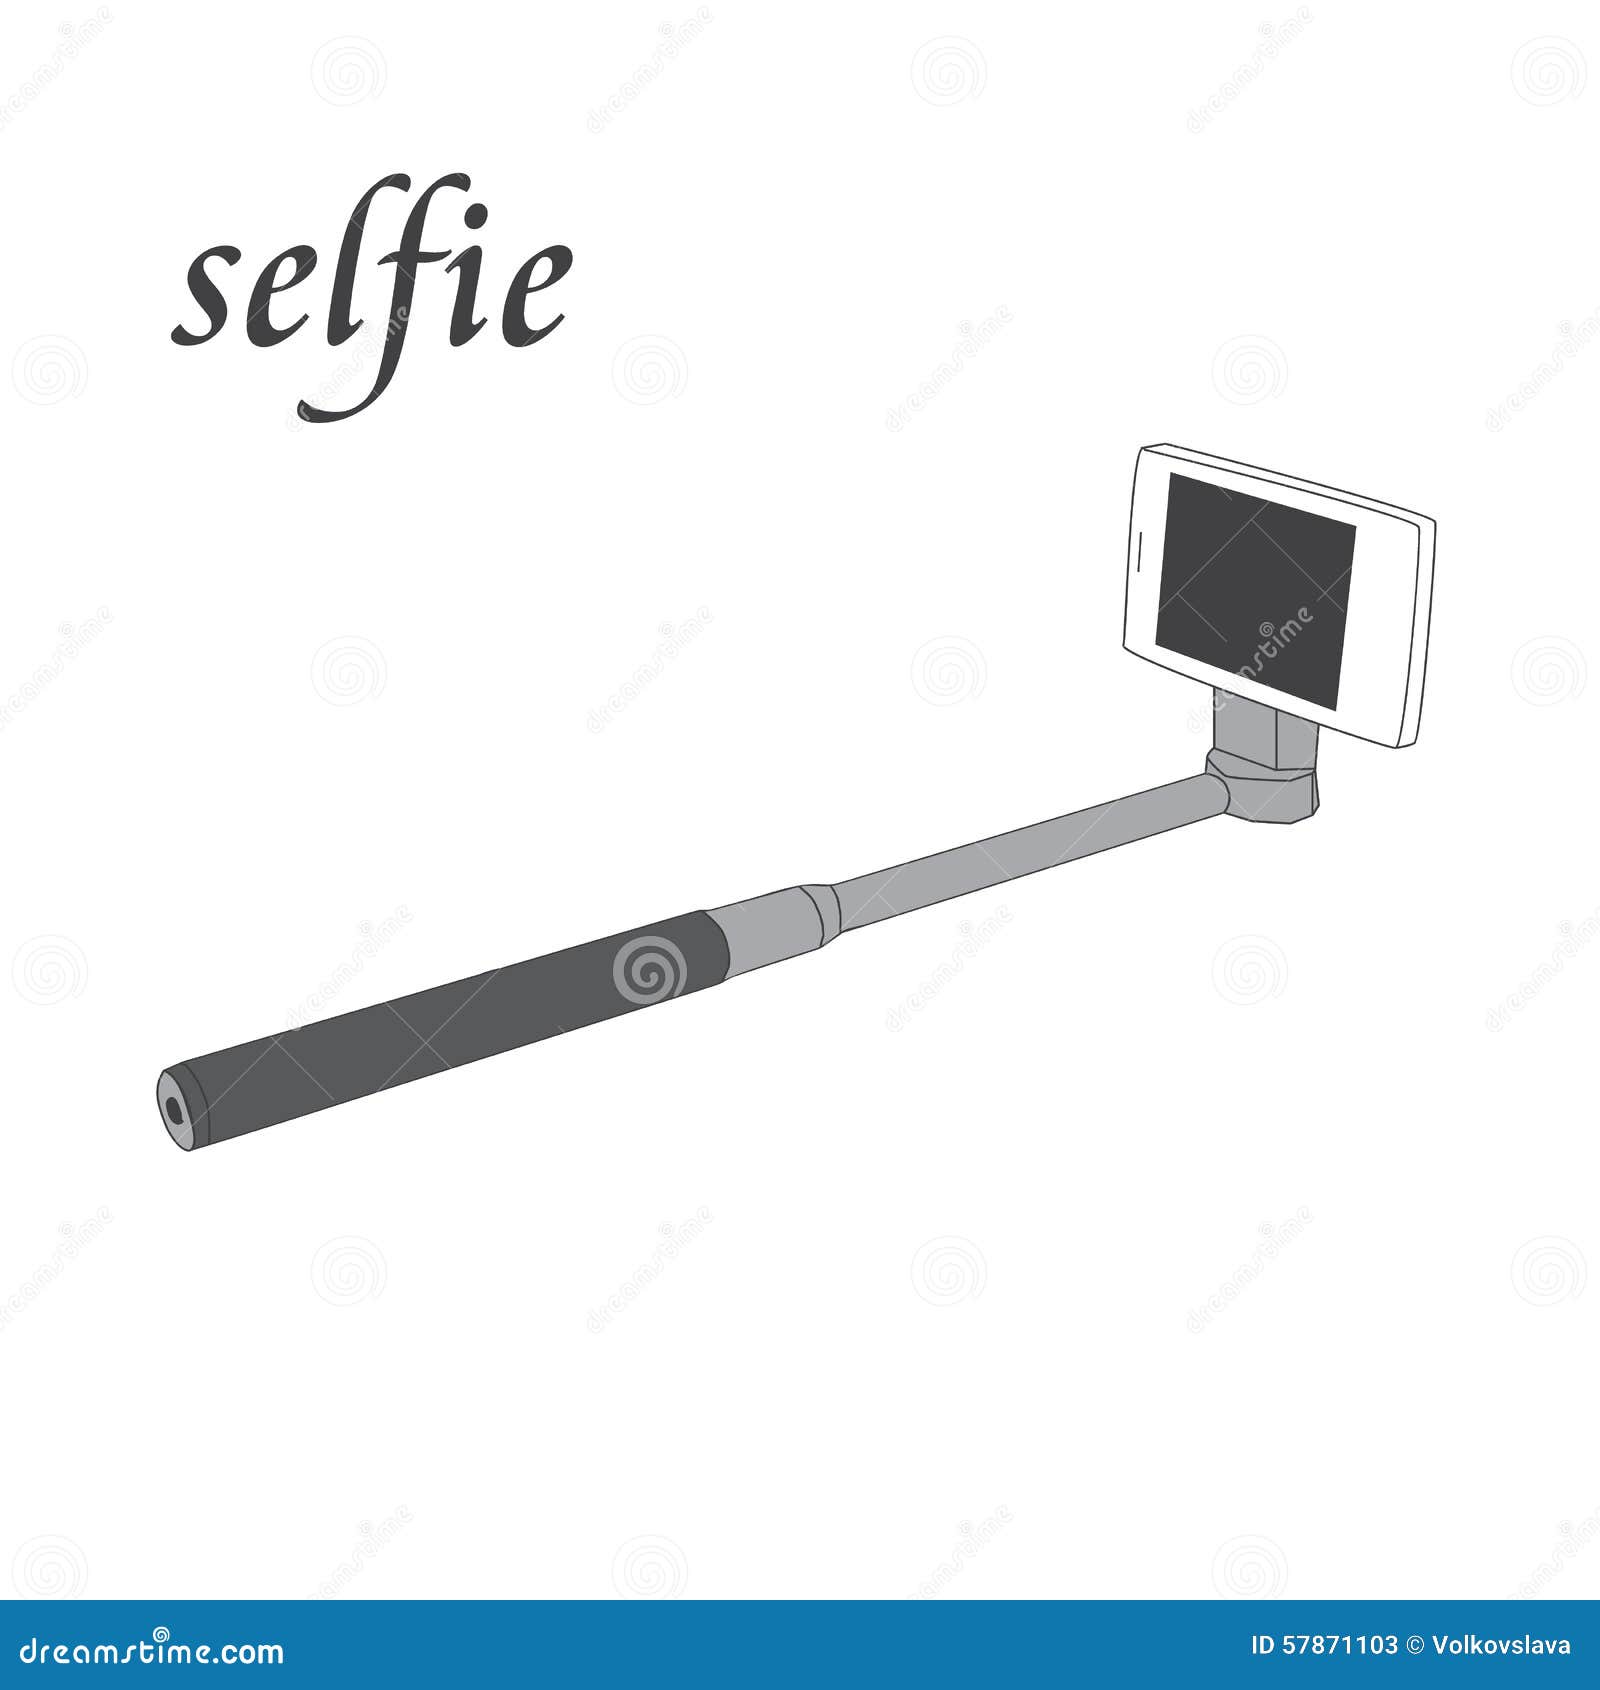 Selfie stick monopod vector. Illustration isolated - 57871103